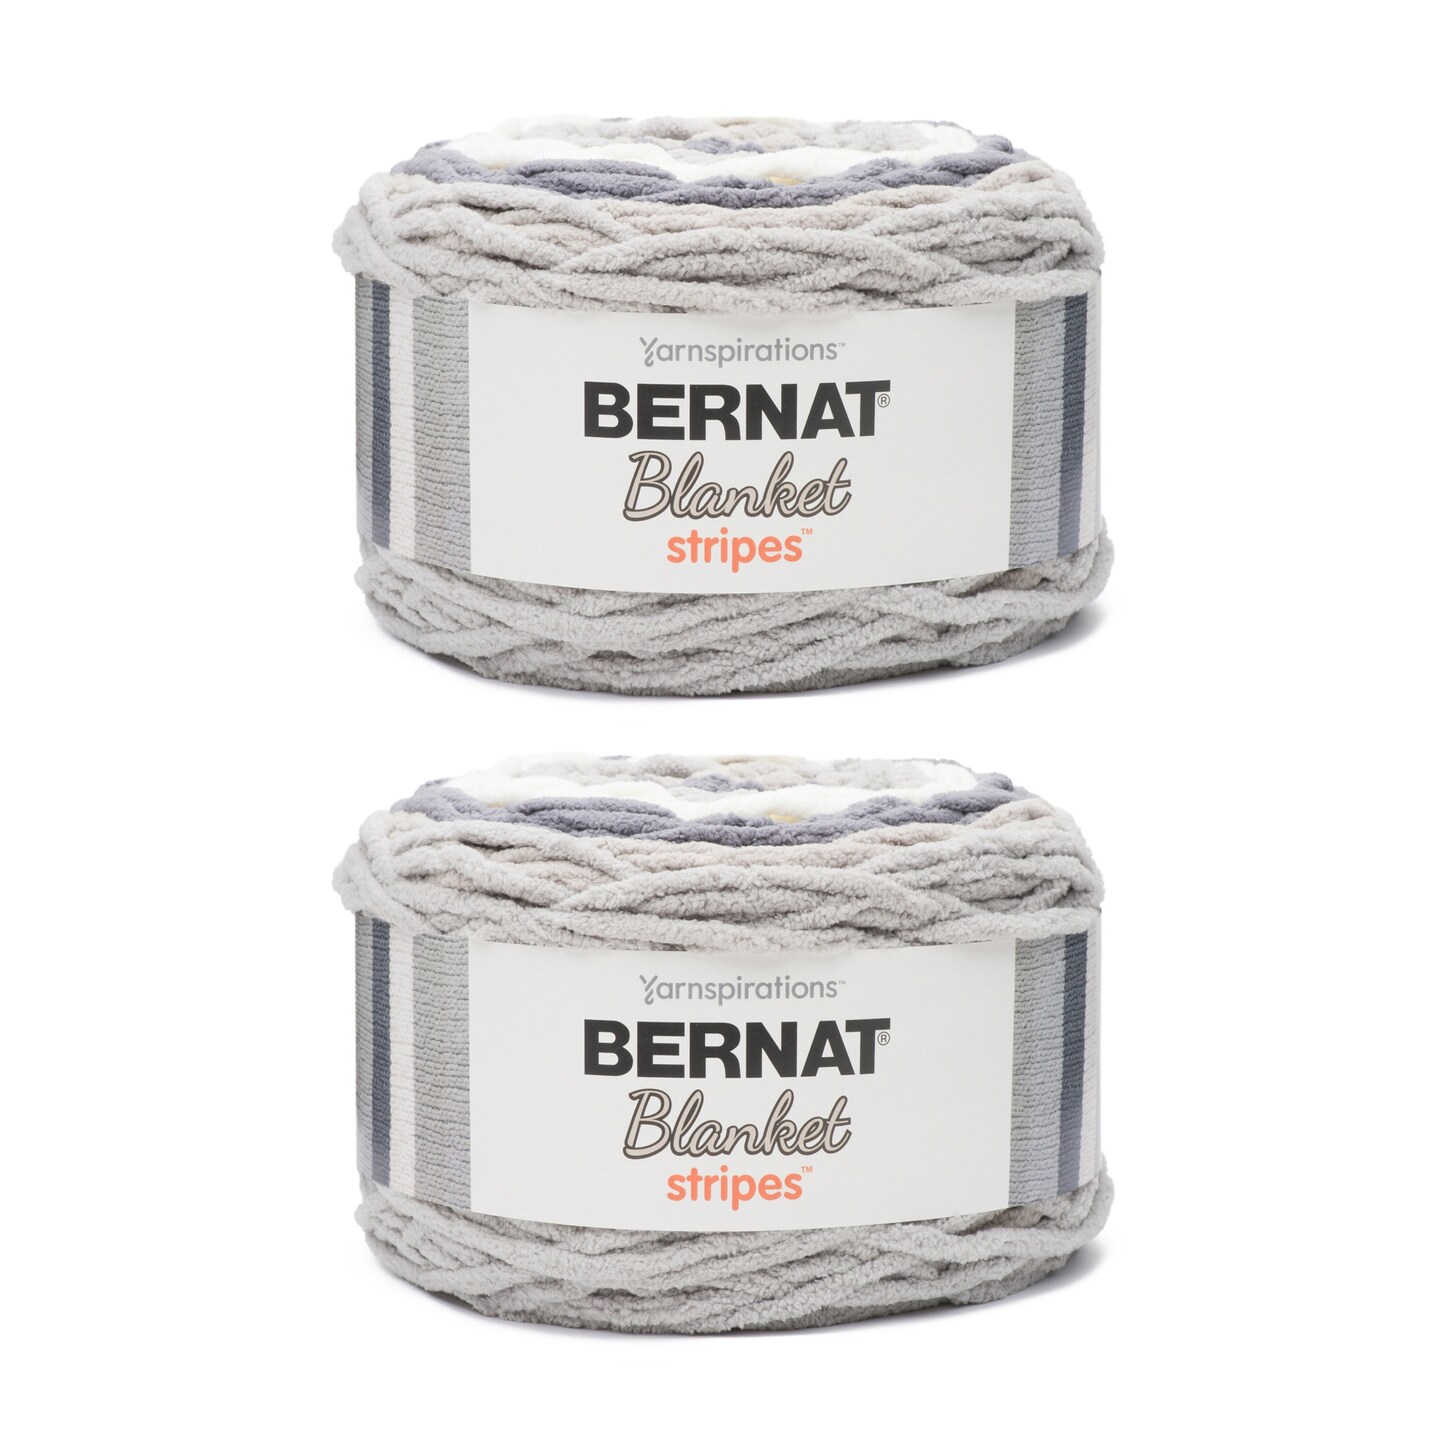 Bernat Blanket Stripes Yarn